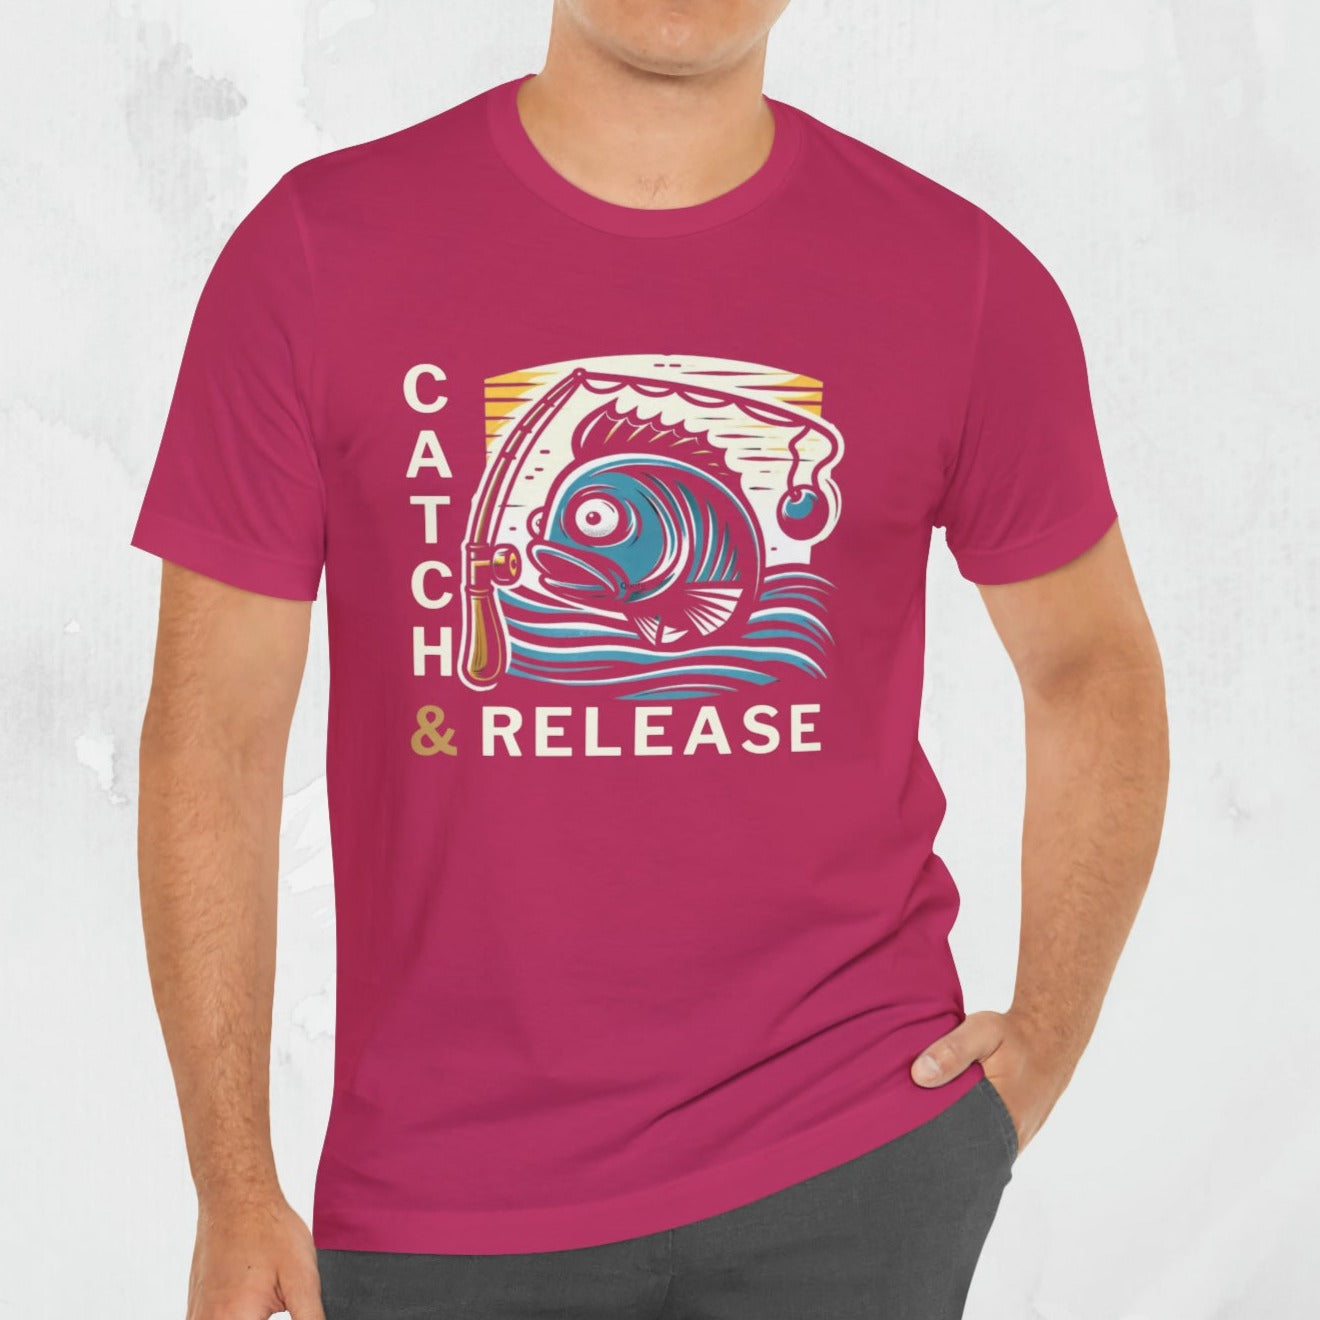 "Catch & Release" Men's T-shirt